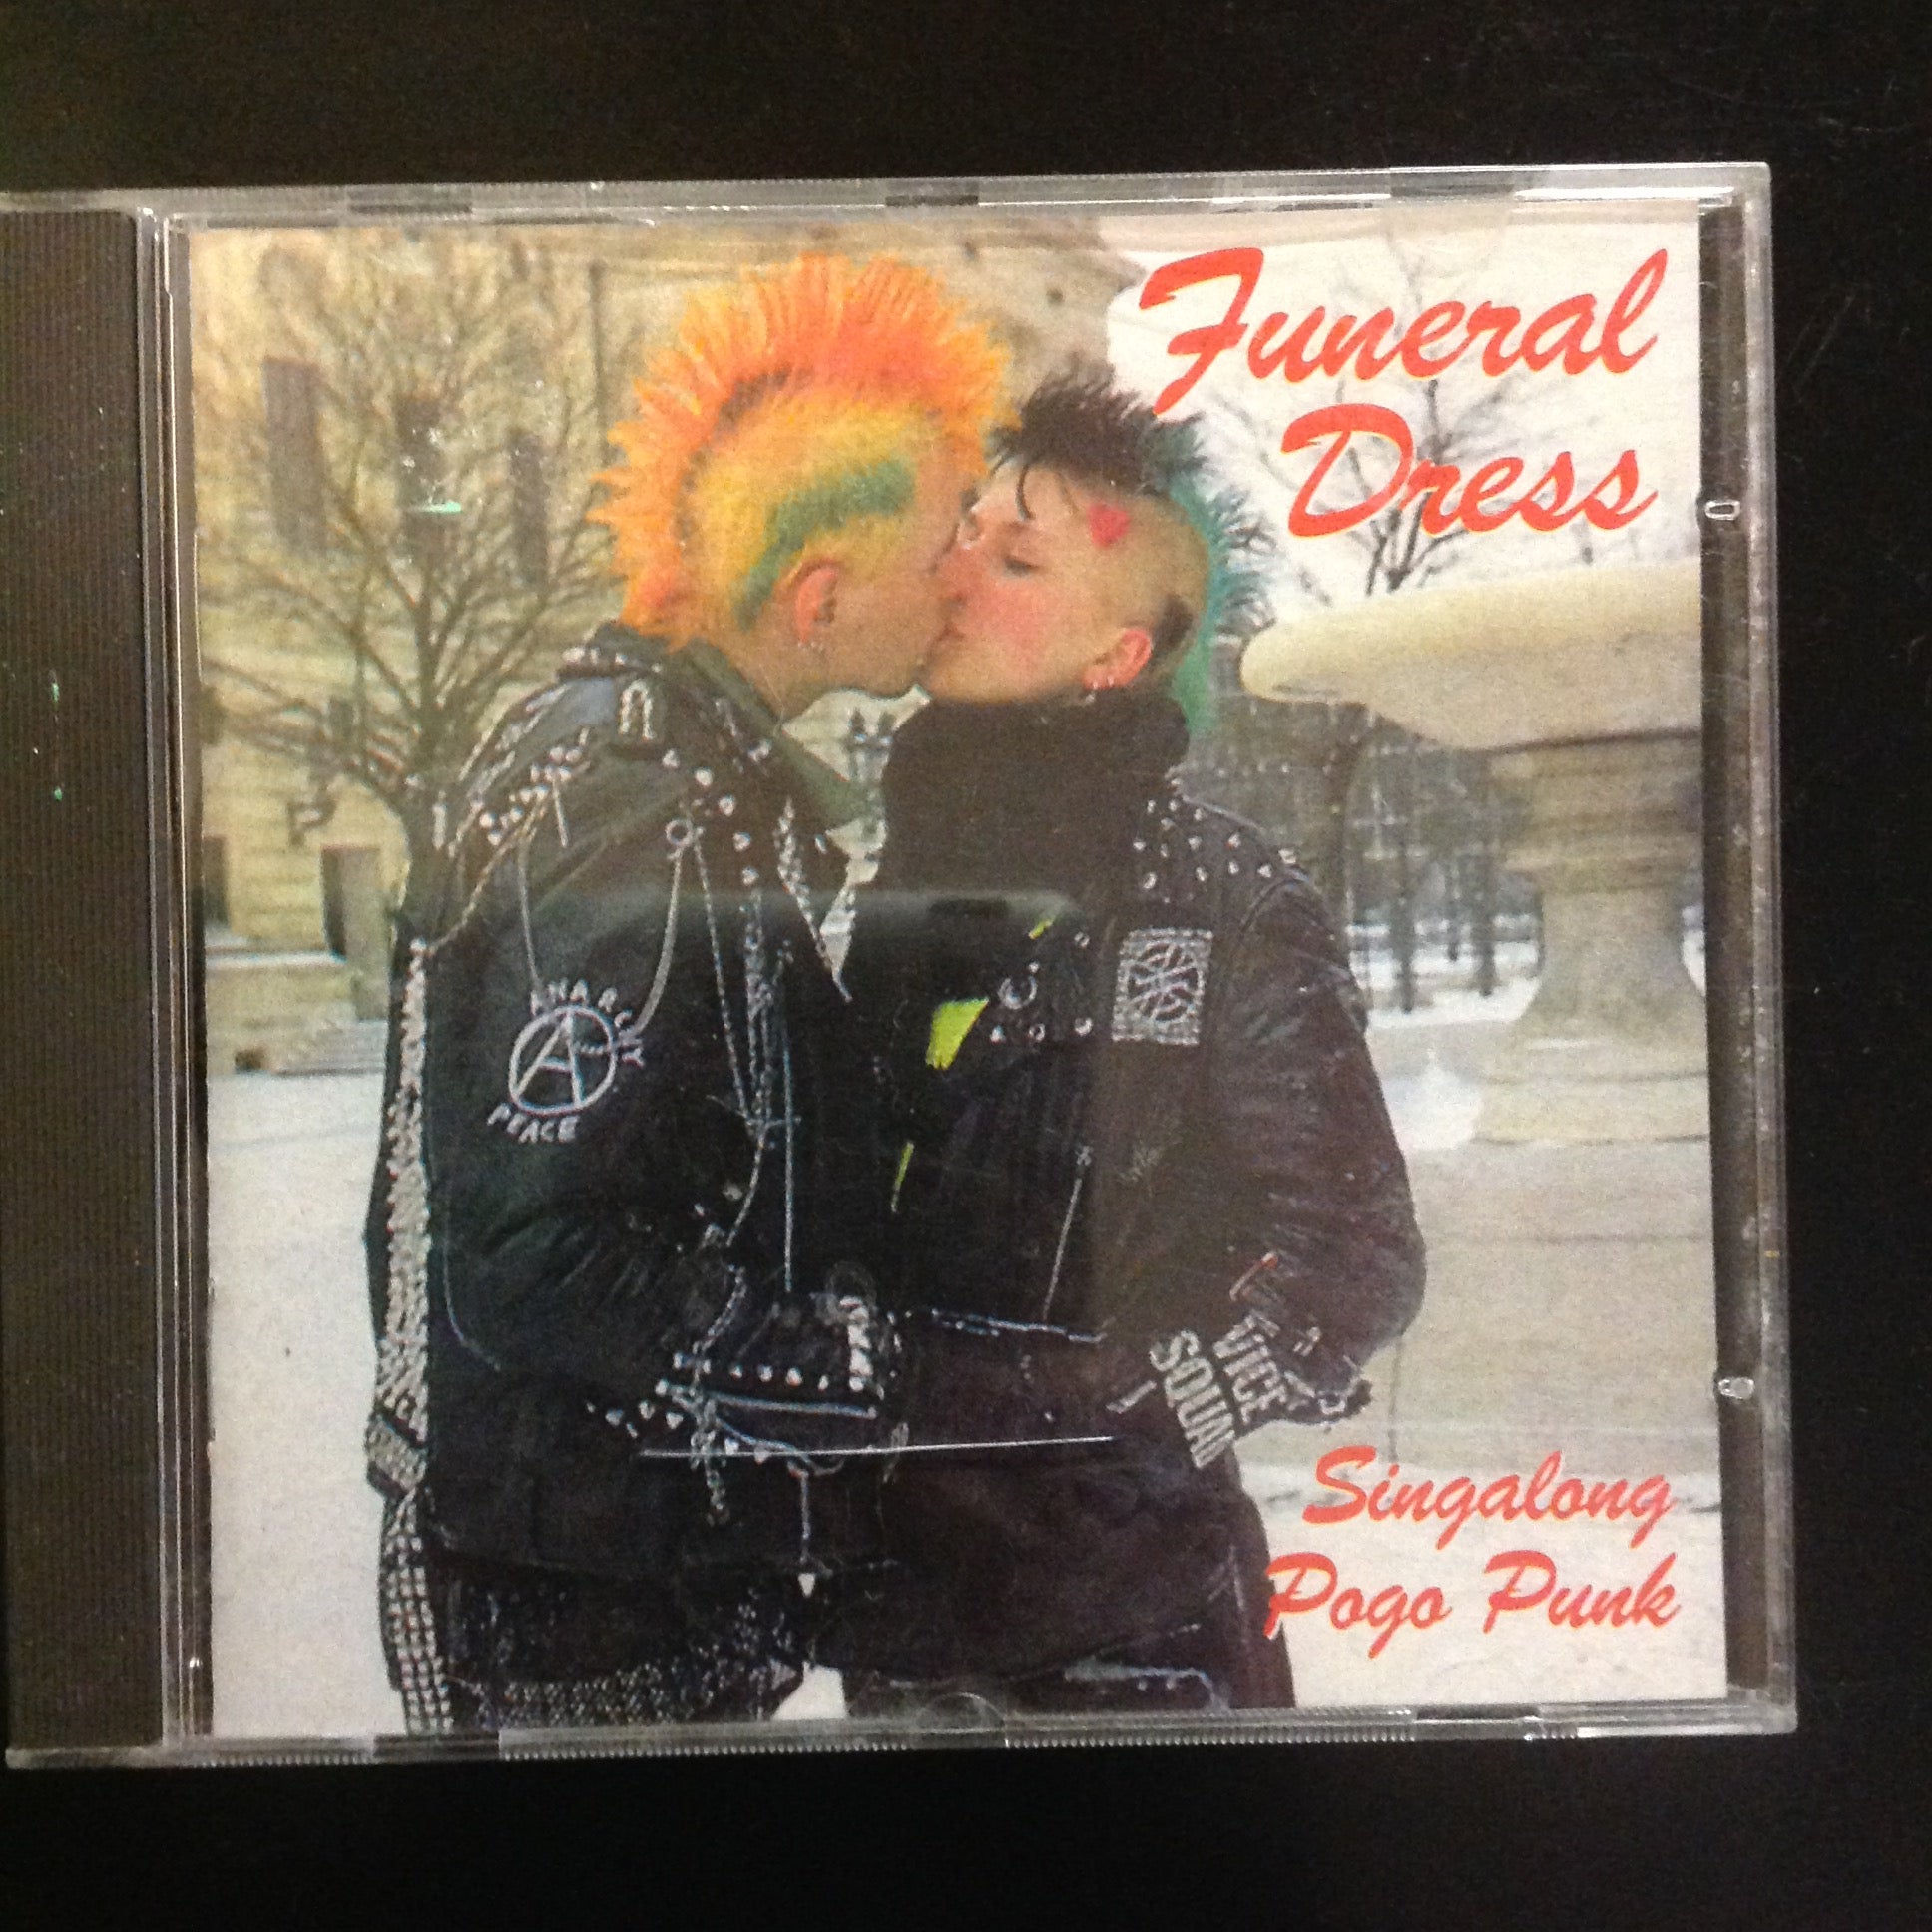 CD Funeral Dress Singalong Pogo Punk NV 59 CD 1996 Germany German